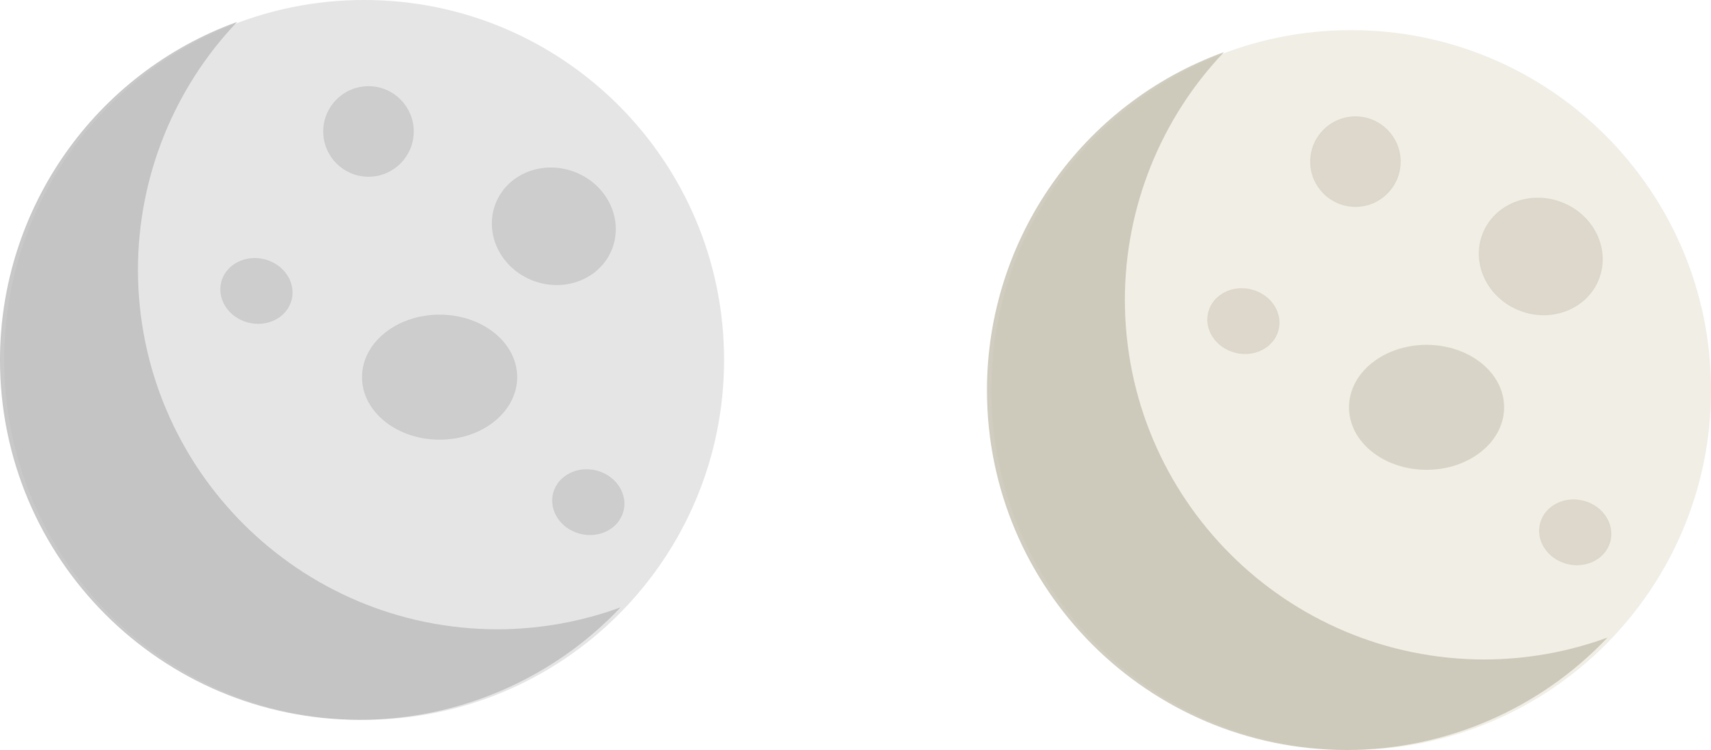 Oval,Circle,Egg